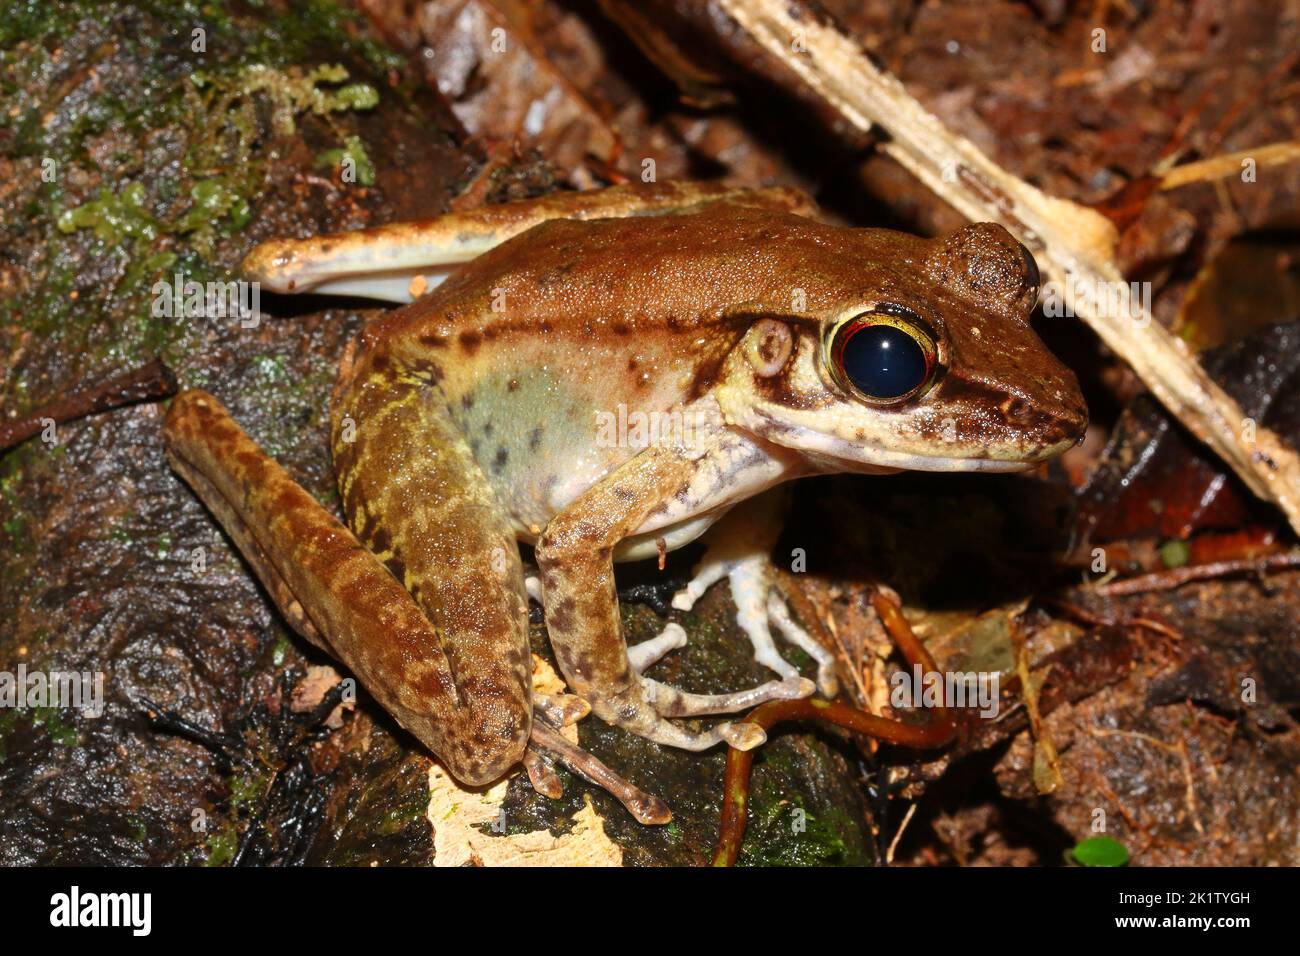 Rana di Sabah Borneo o rana di torrente a zampe falcate (Meristogenys orphnnocnemis) in un habitat naturale Foto Stock